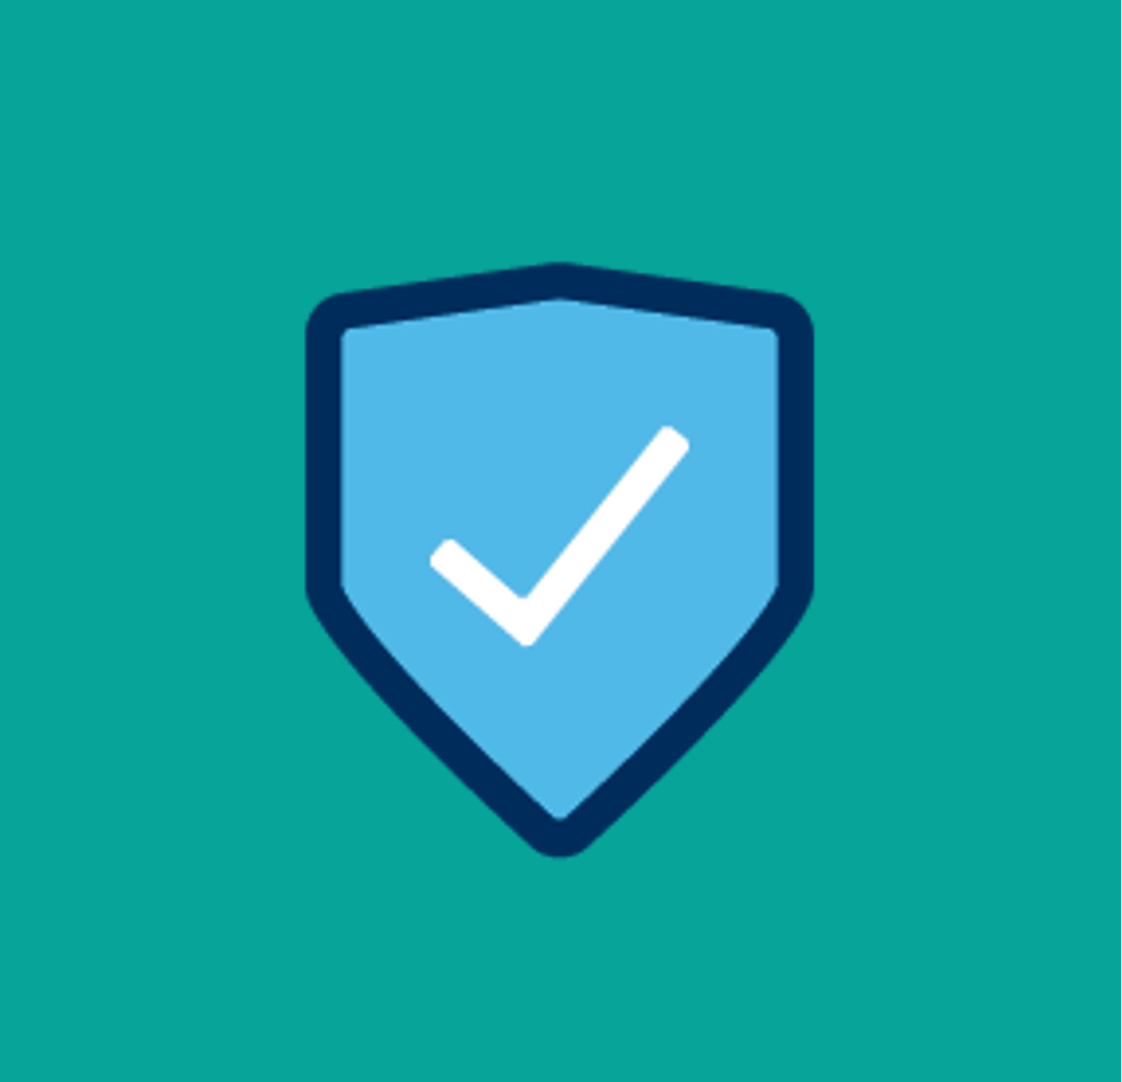 White checkmark icon inside blue badge. Green background.